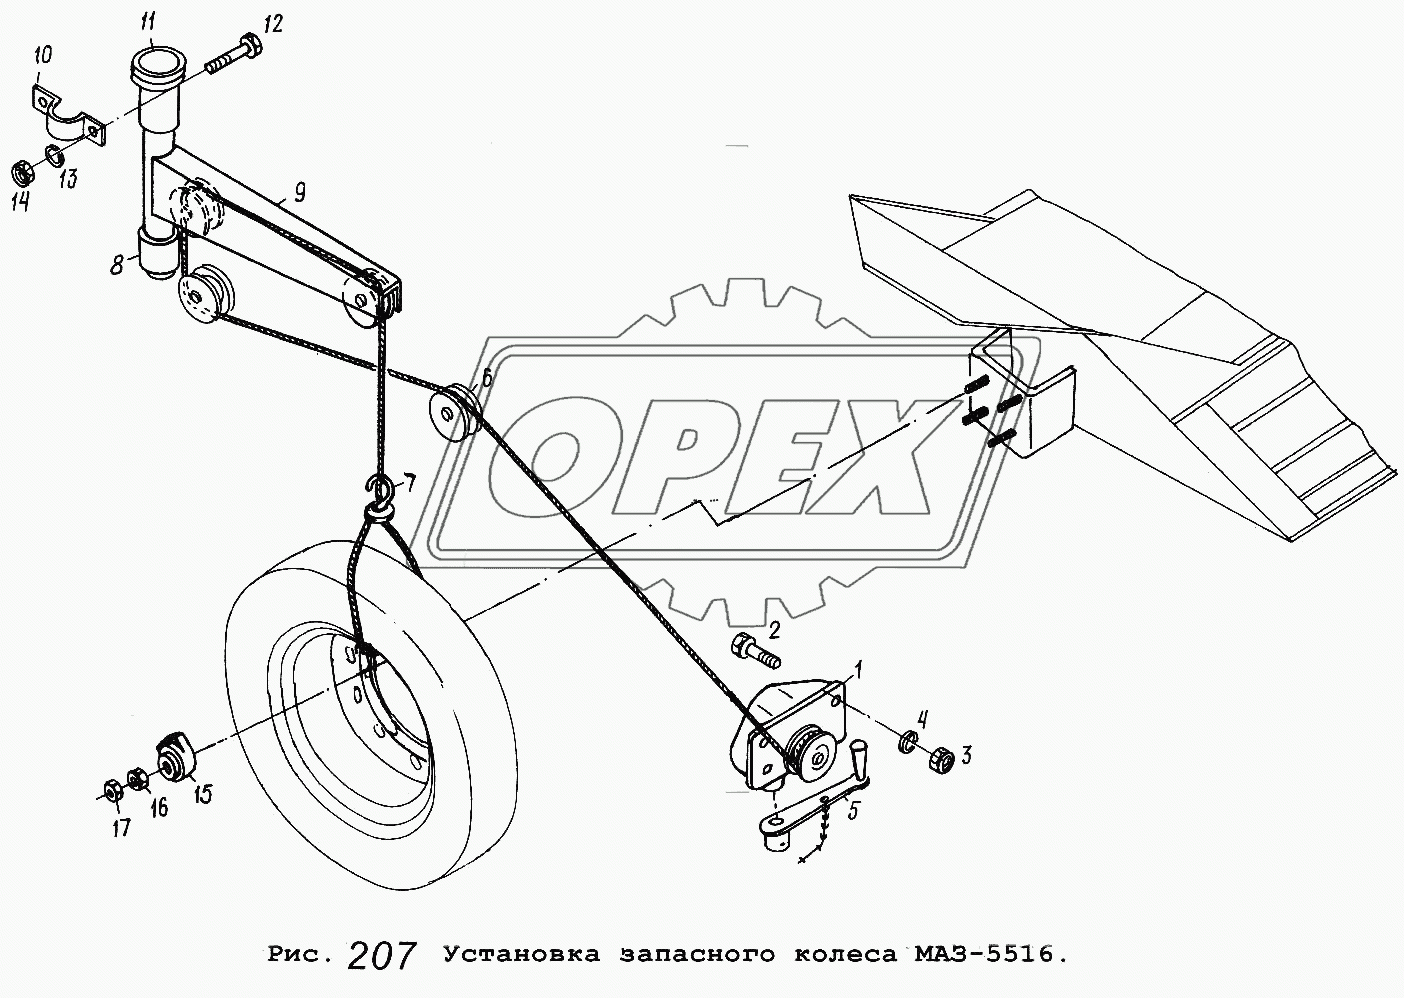 Установка запасного колеса МАЗ-5516